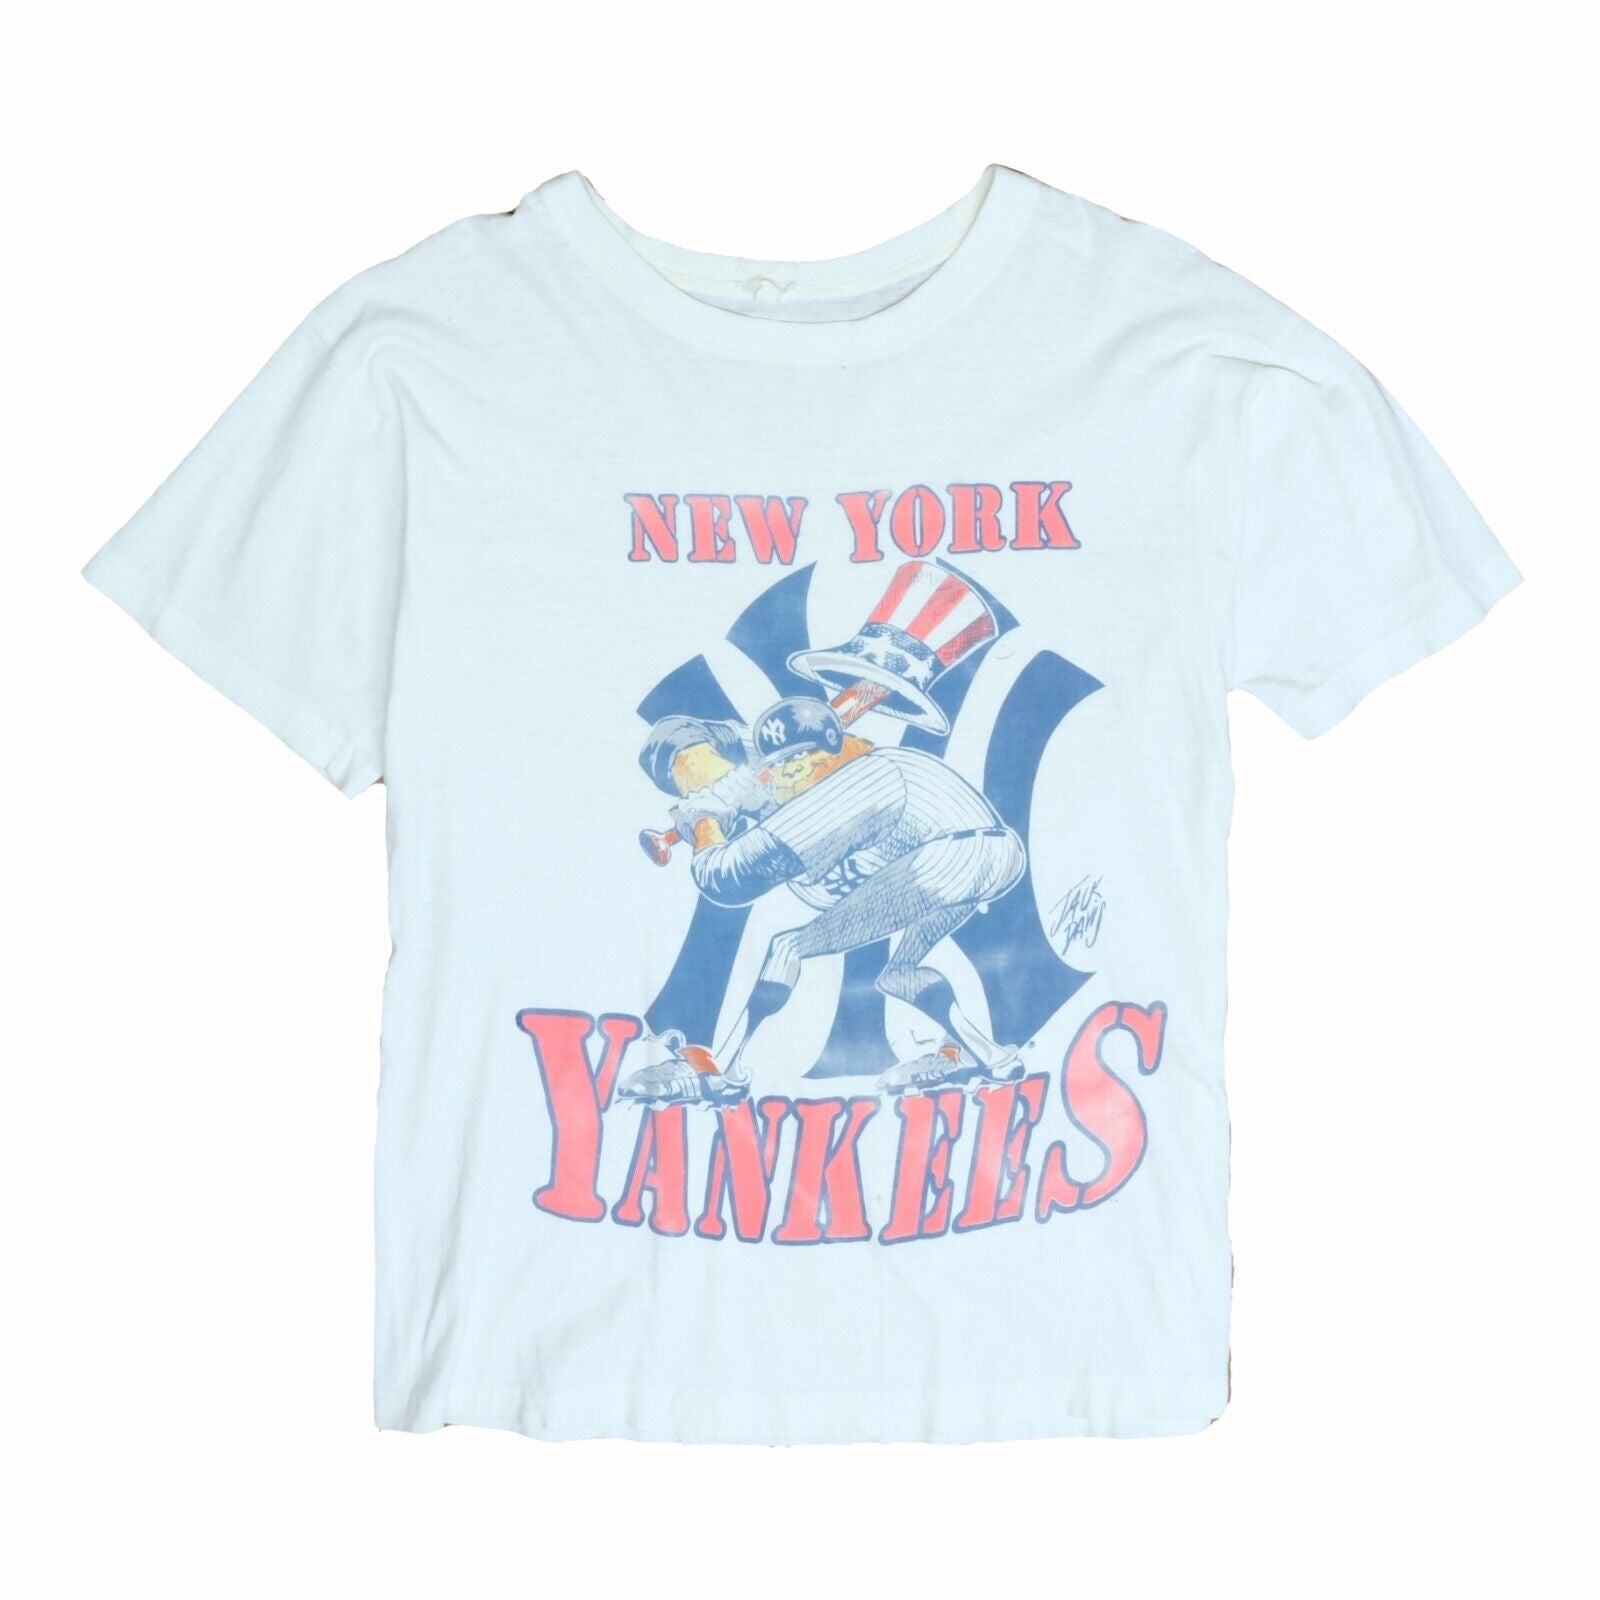 Vintage New York Yankees Jack Davis T-Shirt Size Large 90s MLB